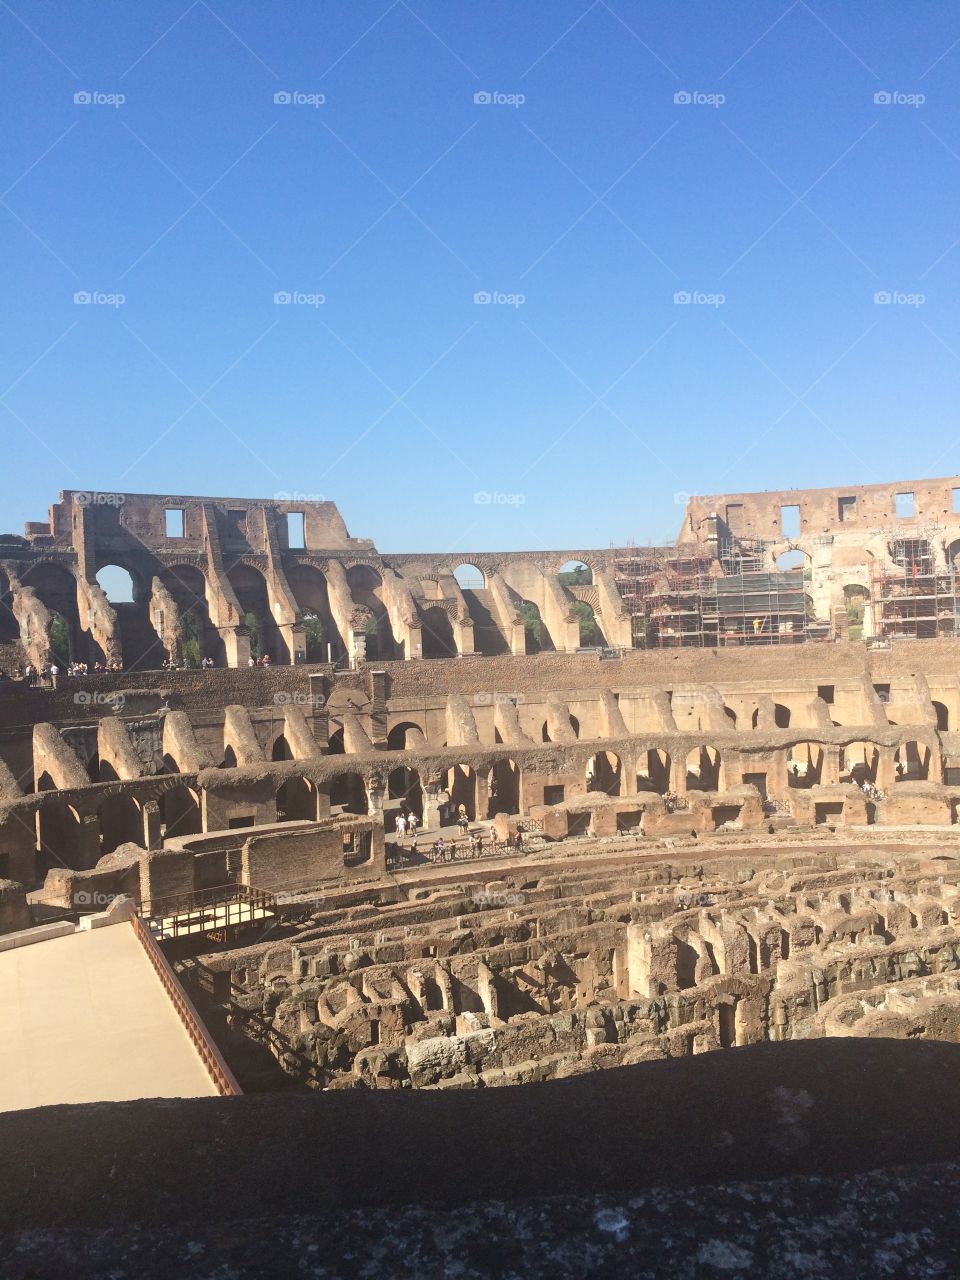 Rome-The Colosseum 